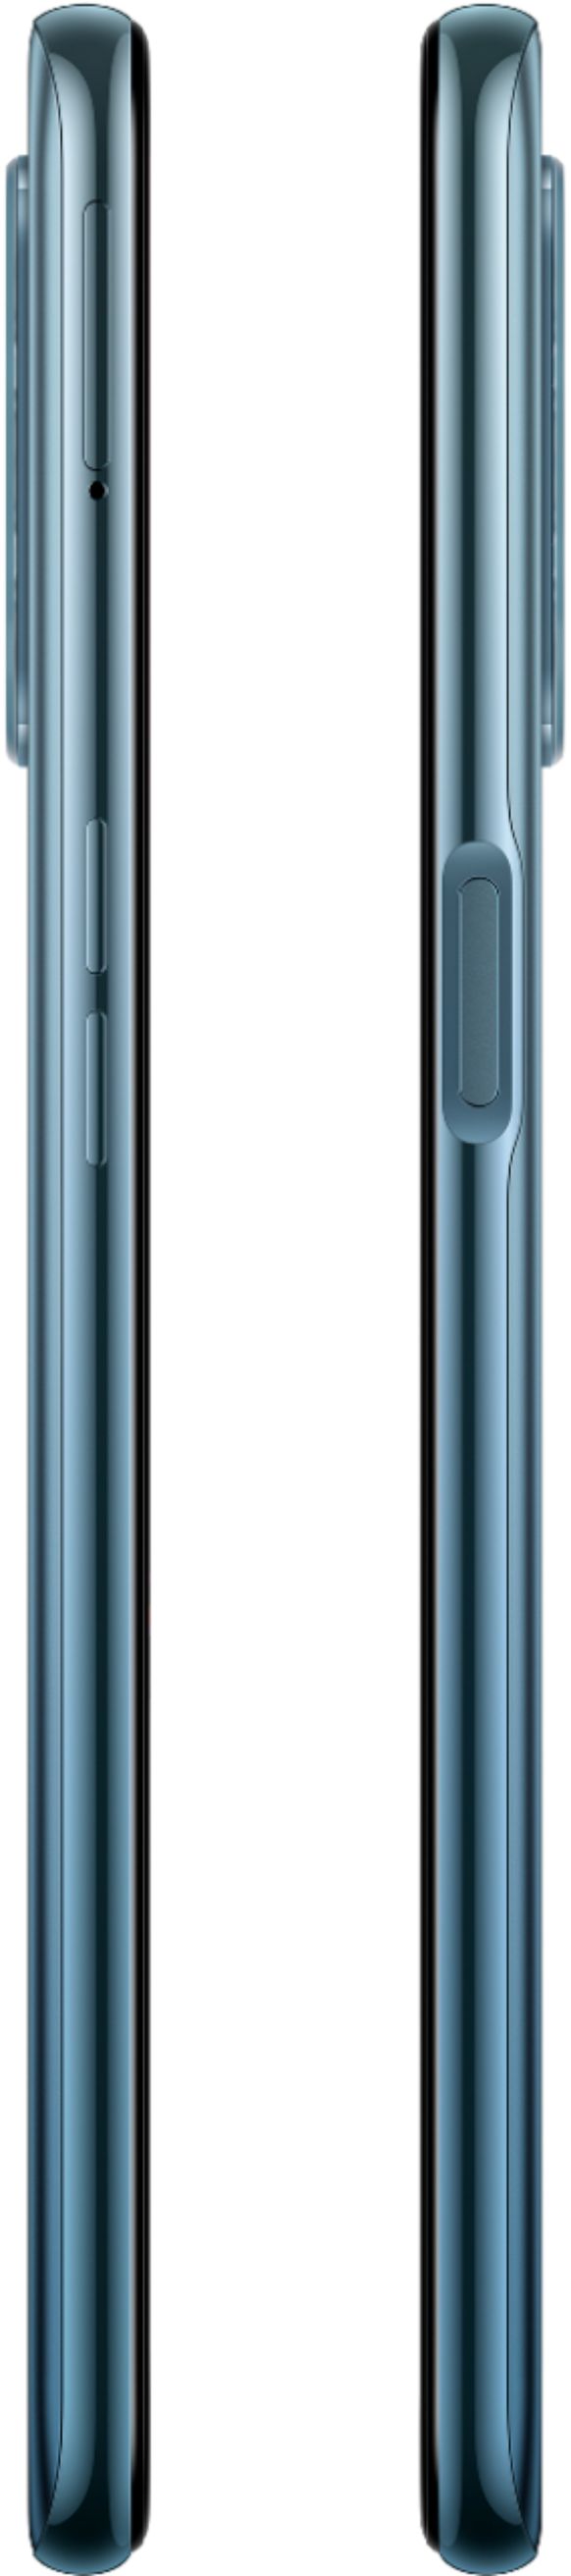 OnePlus Nord (Gray Onyx, 64 GB)